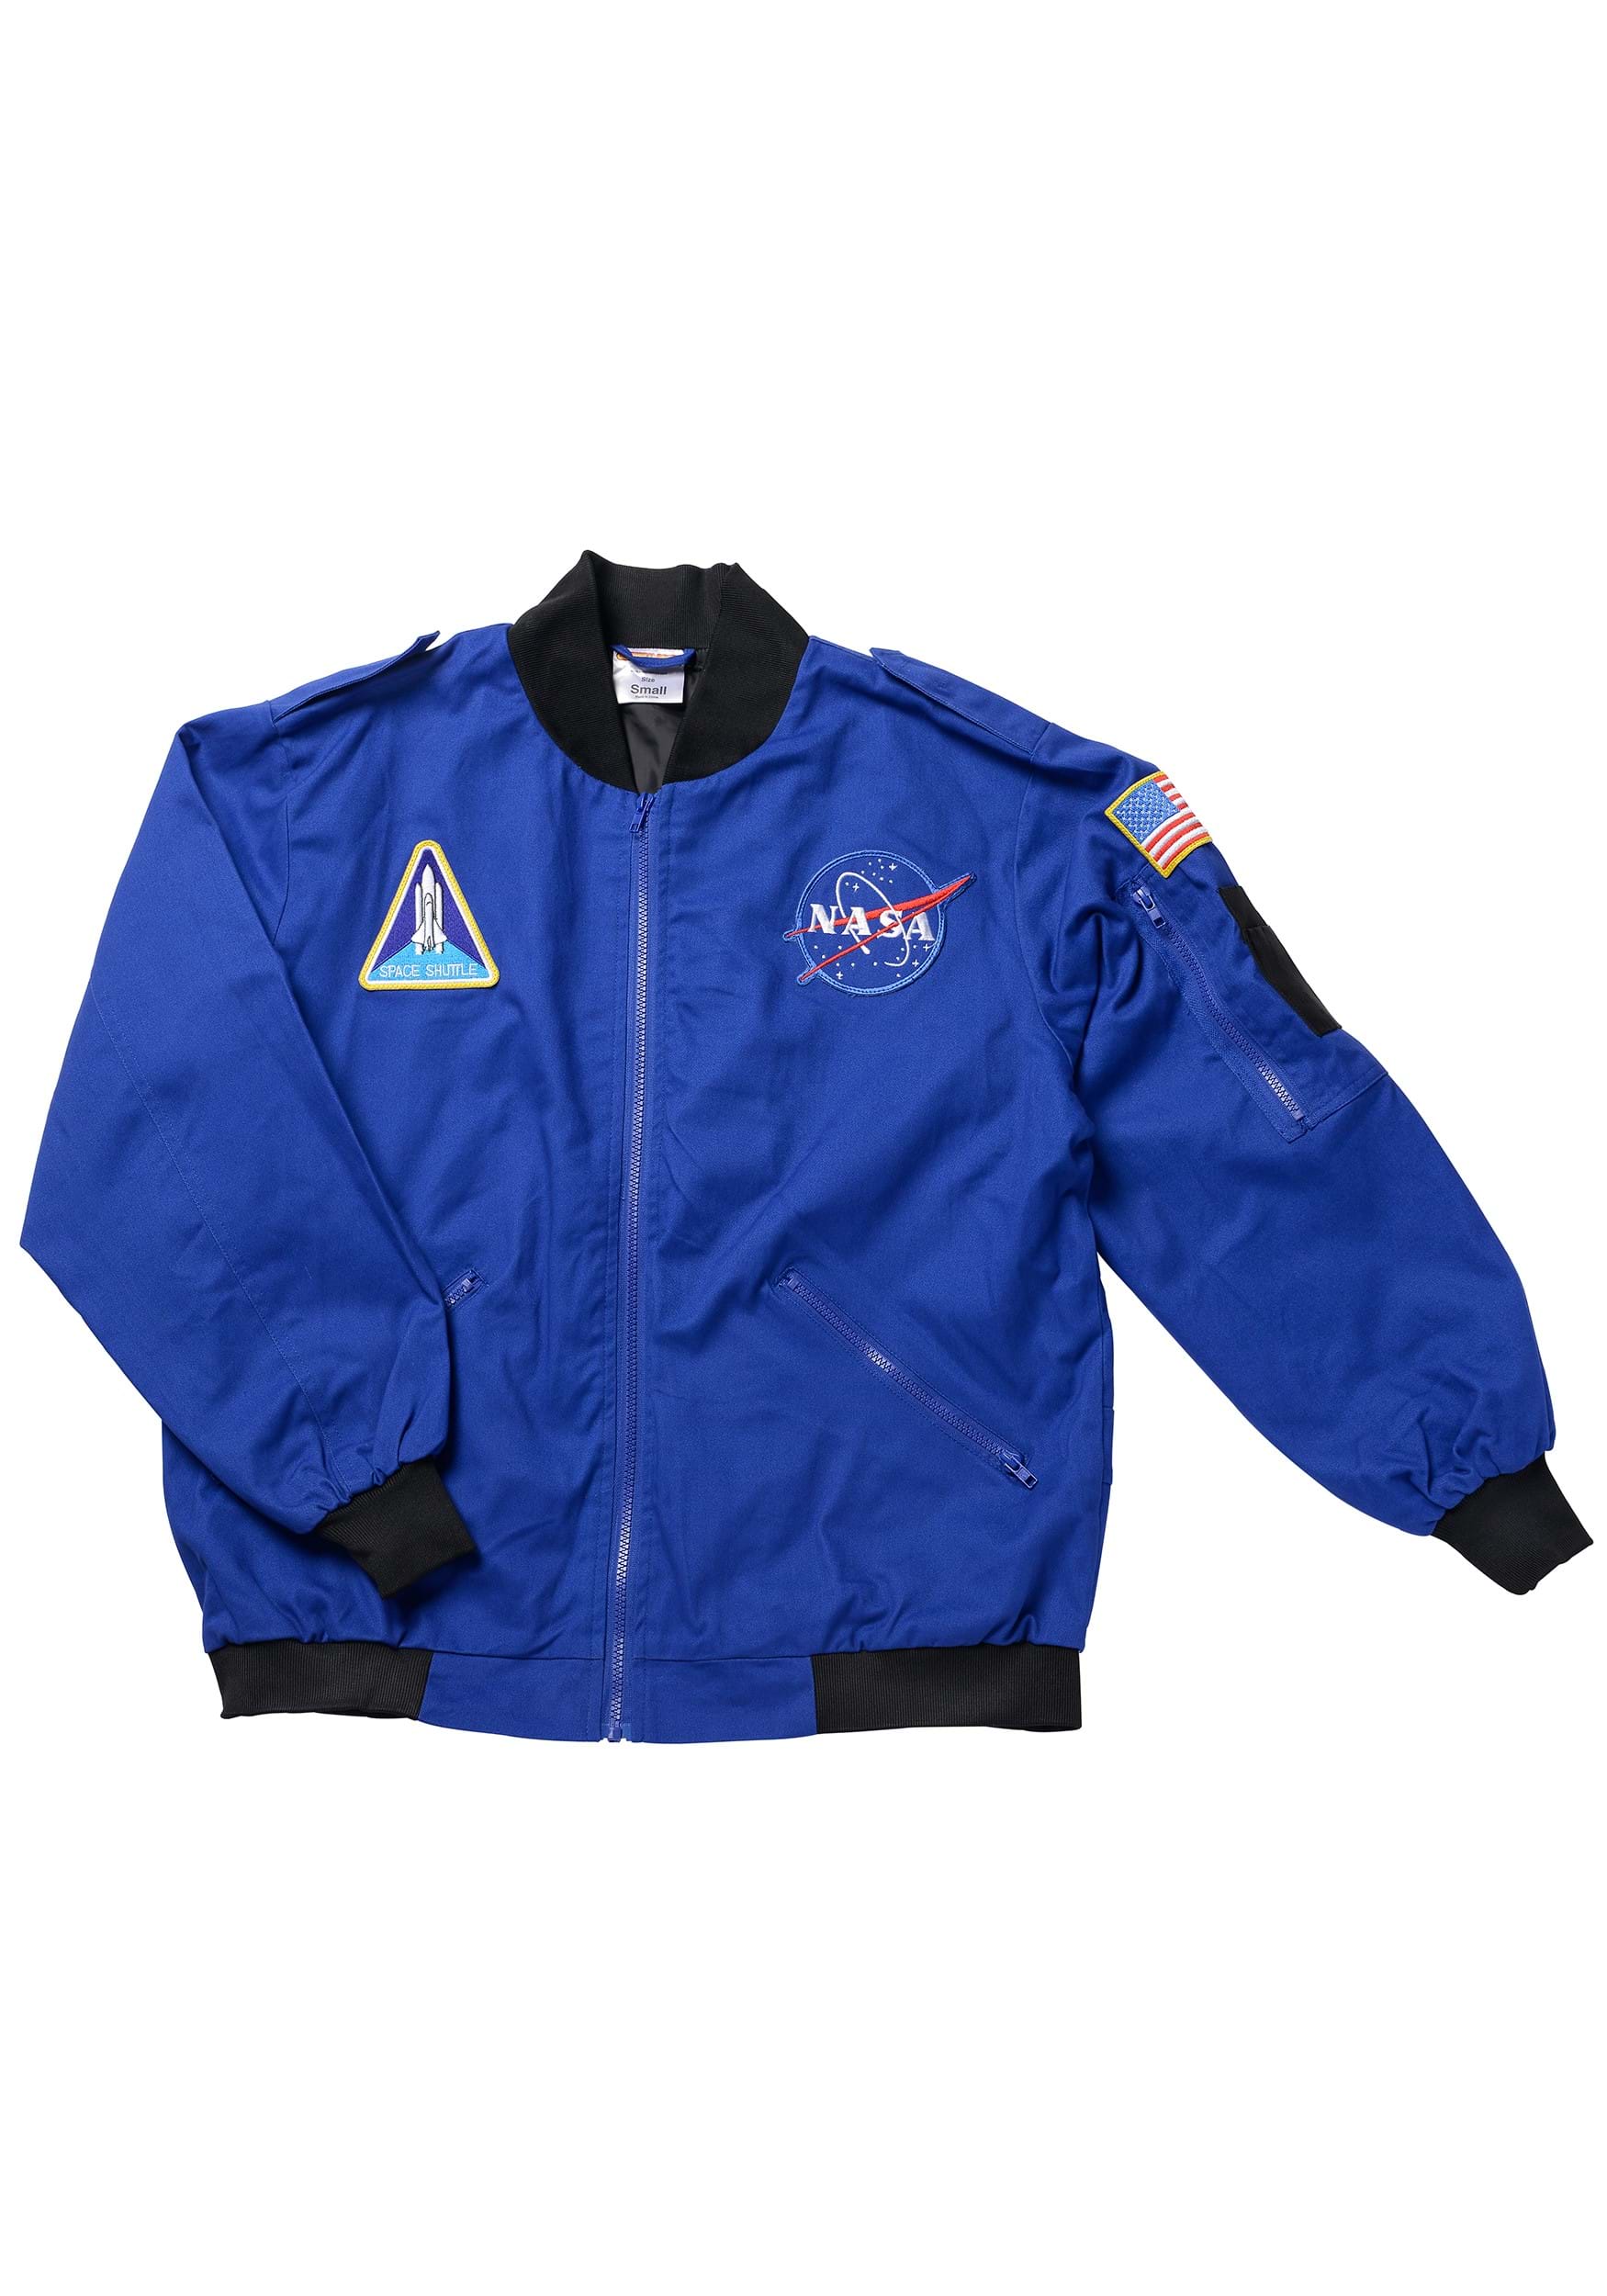 Adult NASA Plus Size Flight Jacket